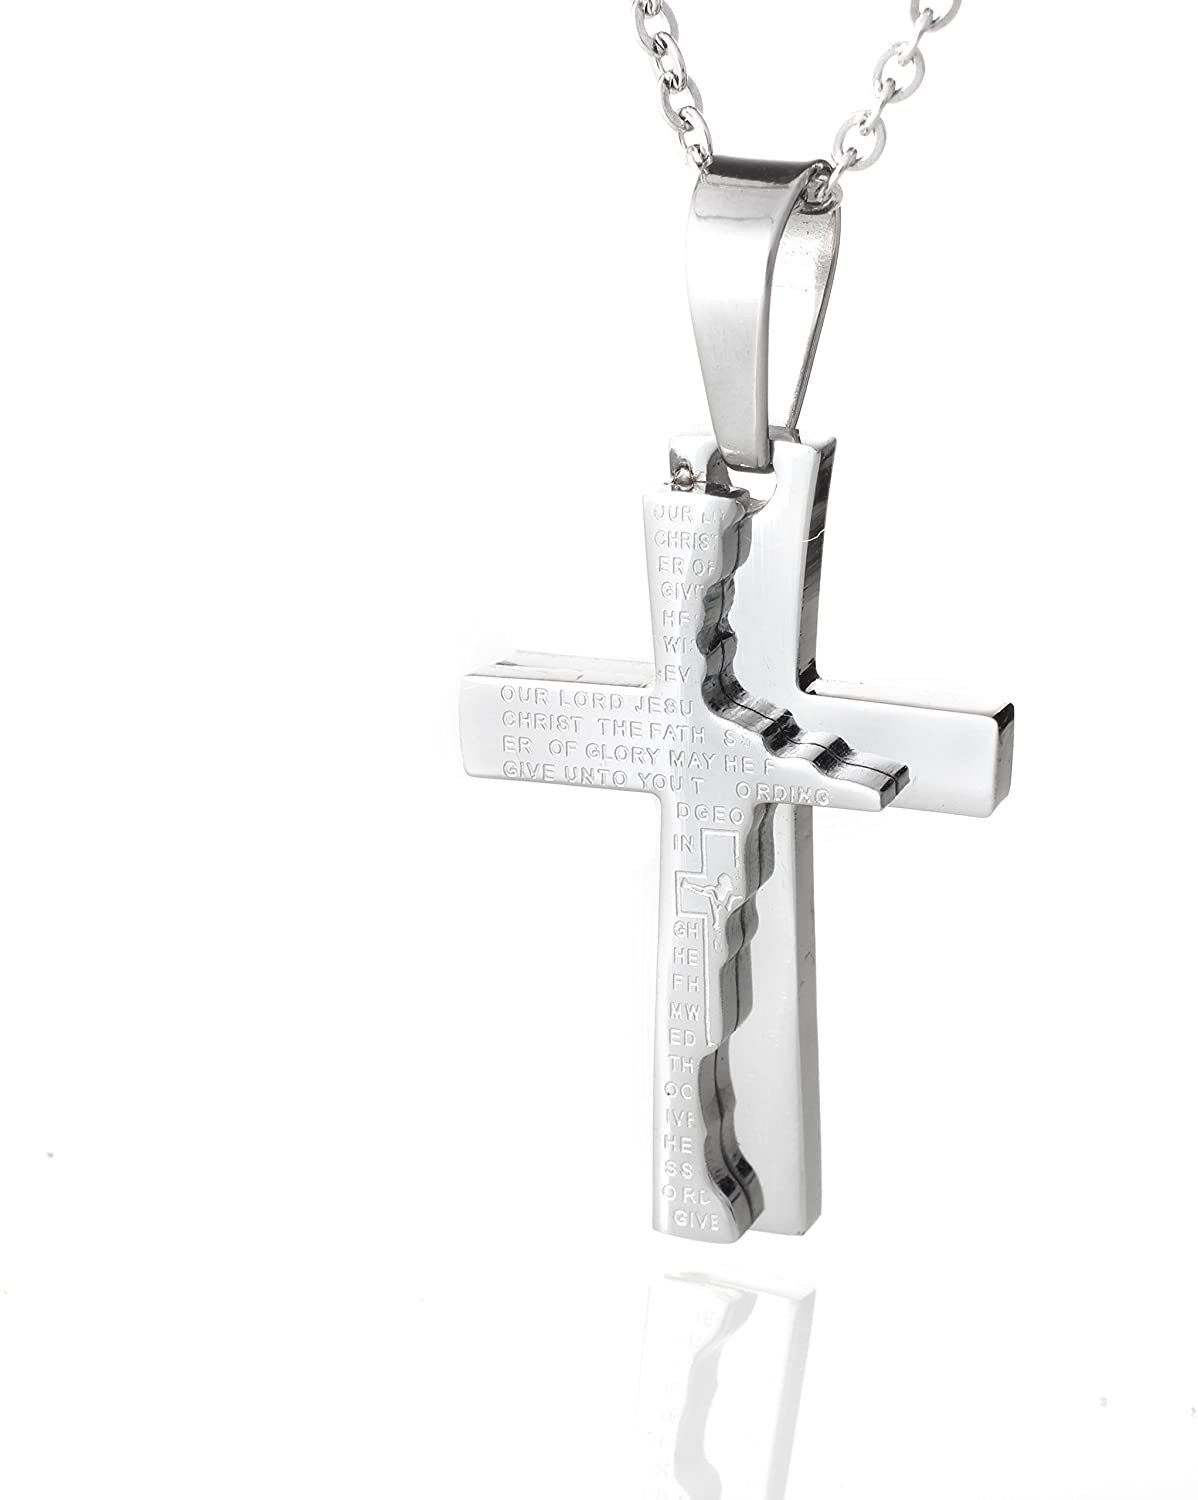 Karisma Kette mit Anhänger Karisma Edelstahl Kettenanhänger Kreuz Jesus "Our Lord" Unisex Edestahlkette - 45.0 Zentimeter